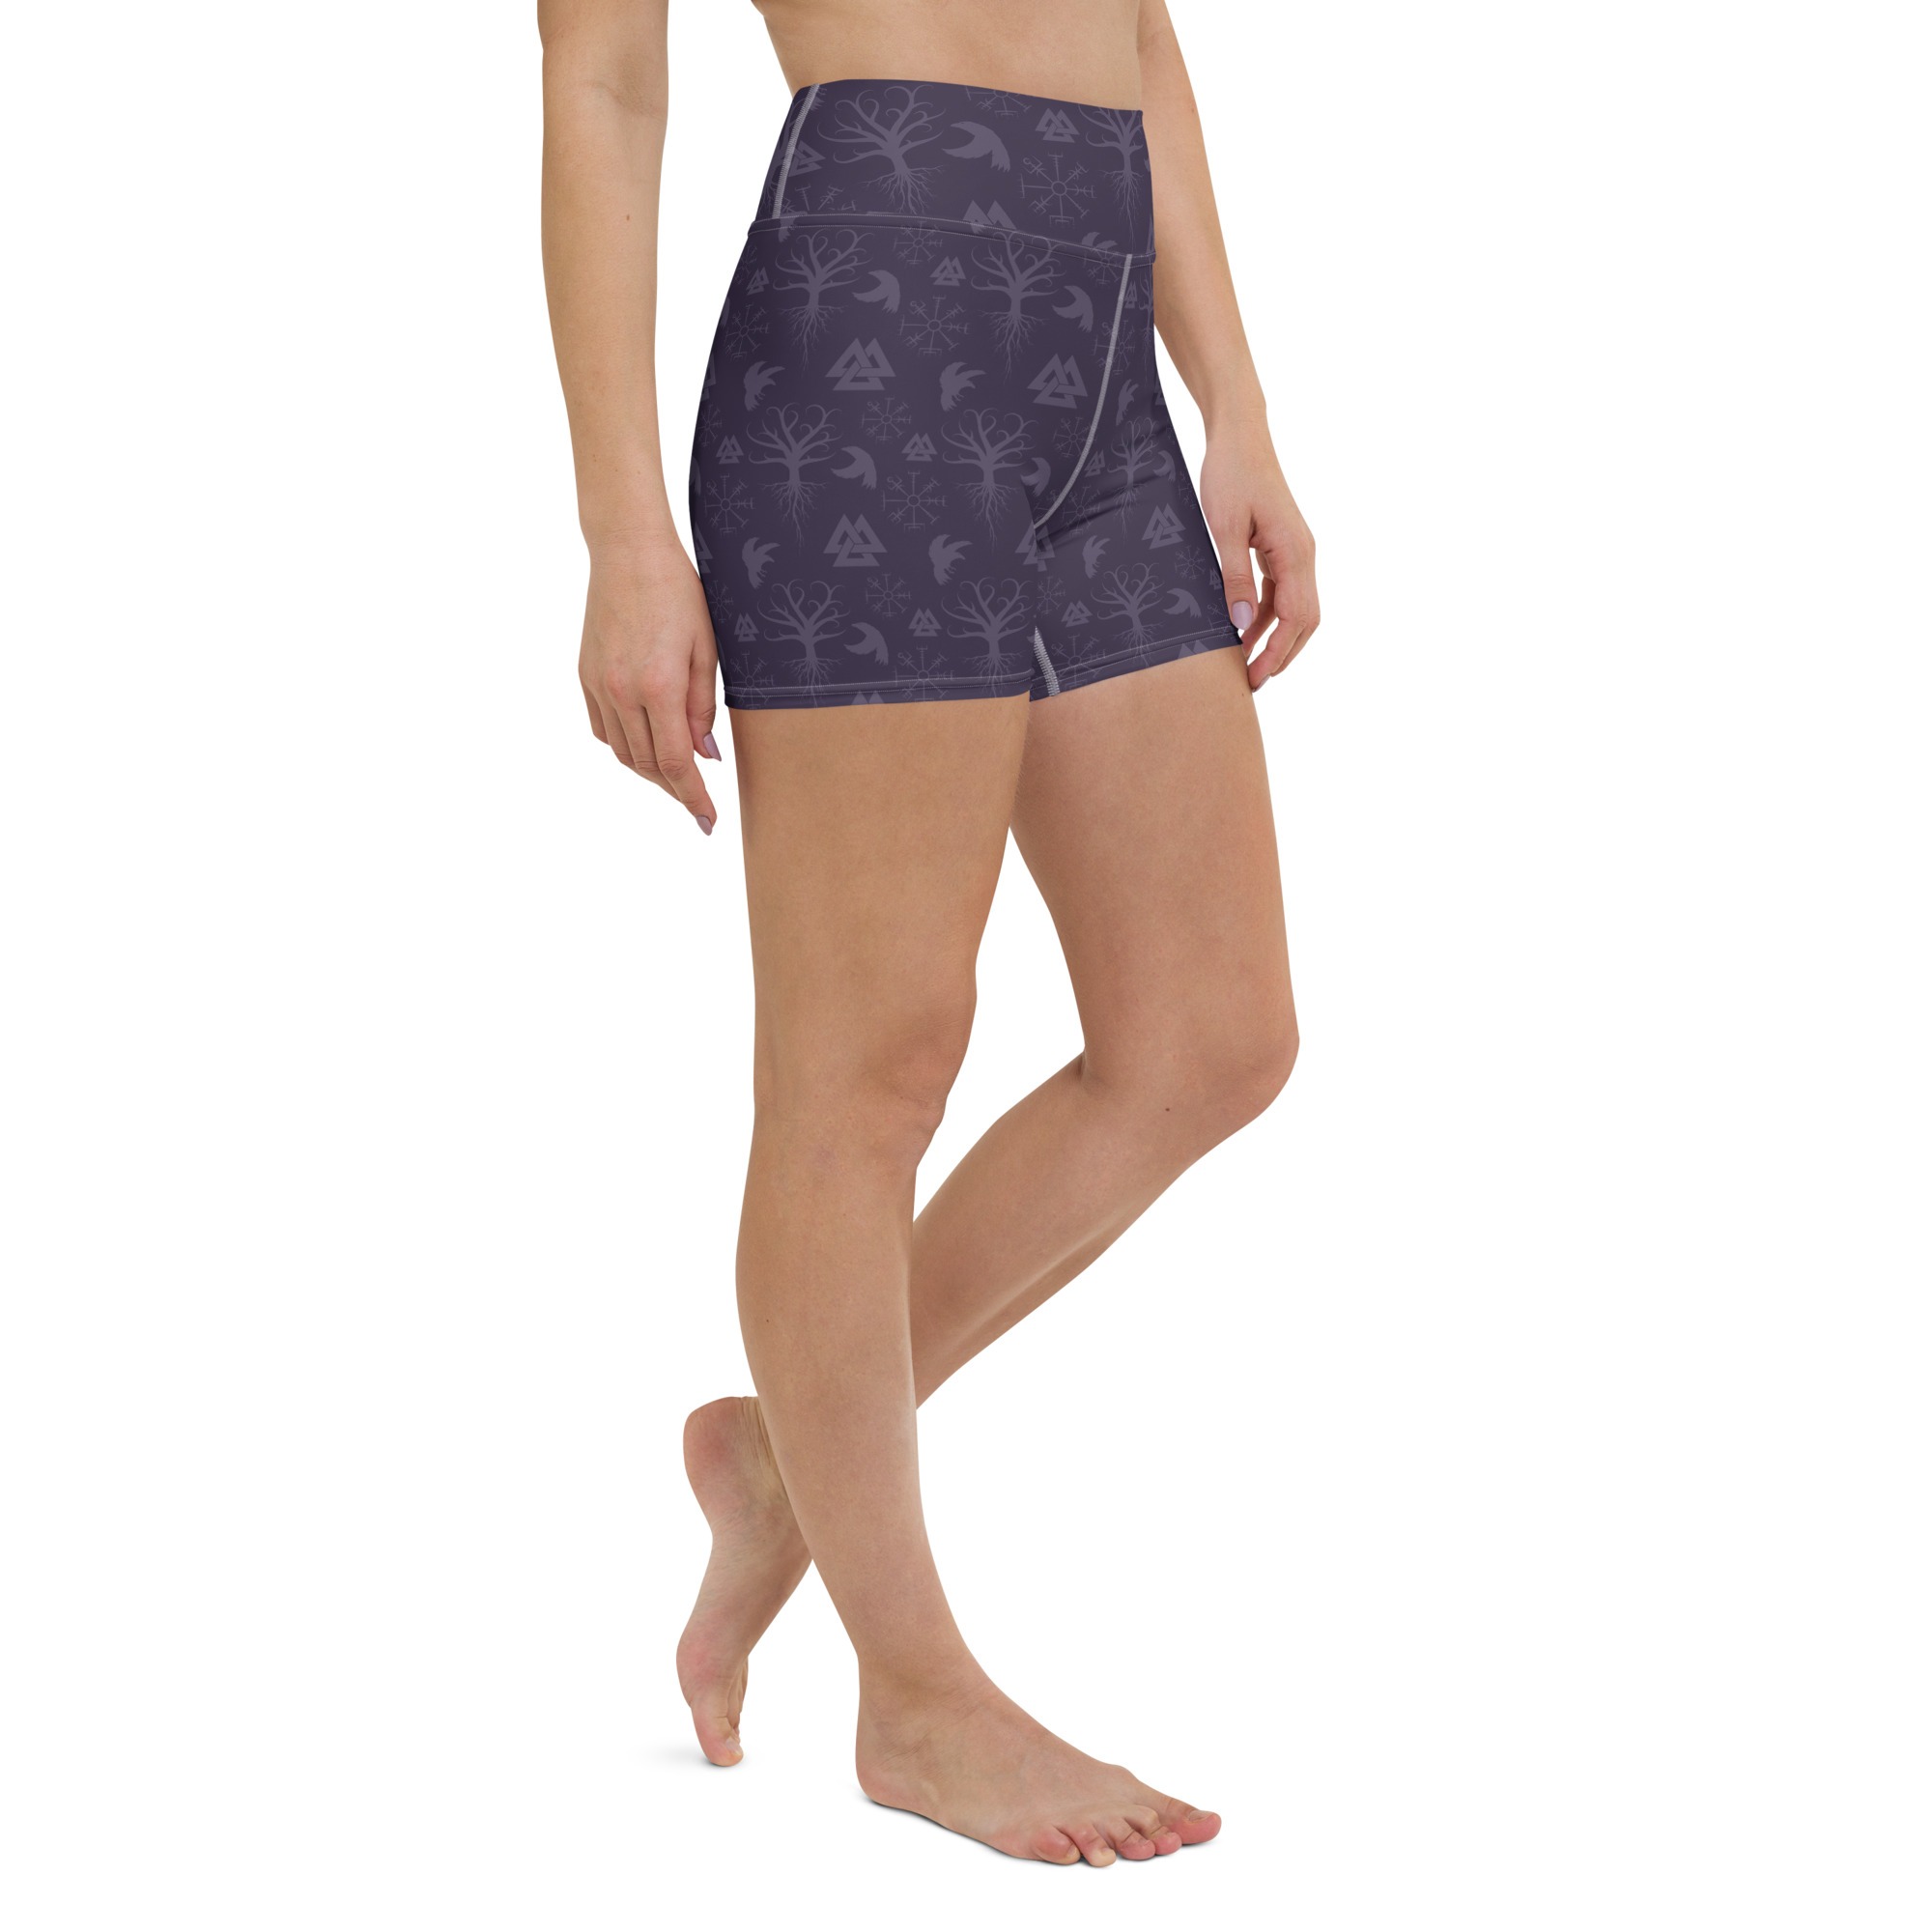 Purple Norse Symbols Yoga Shorts